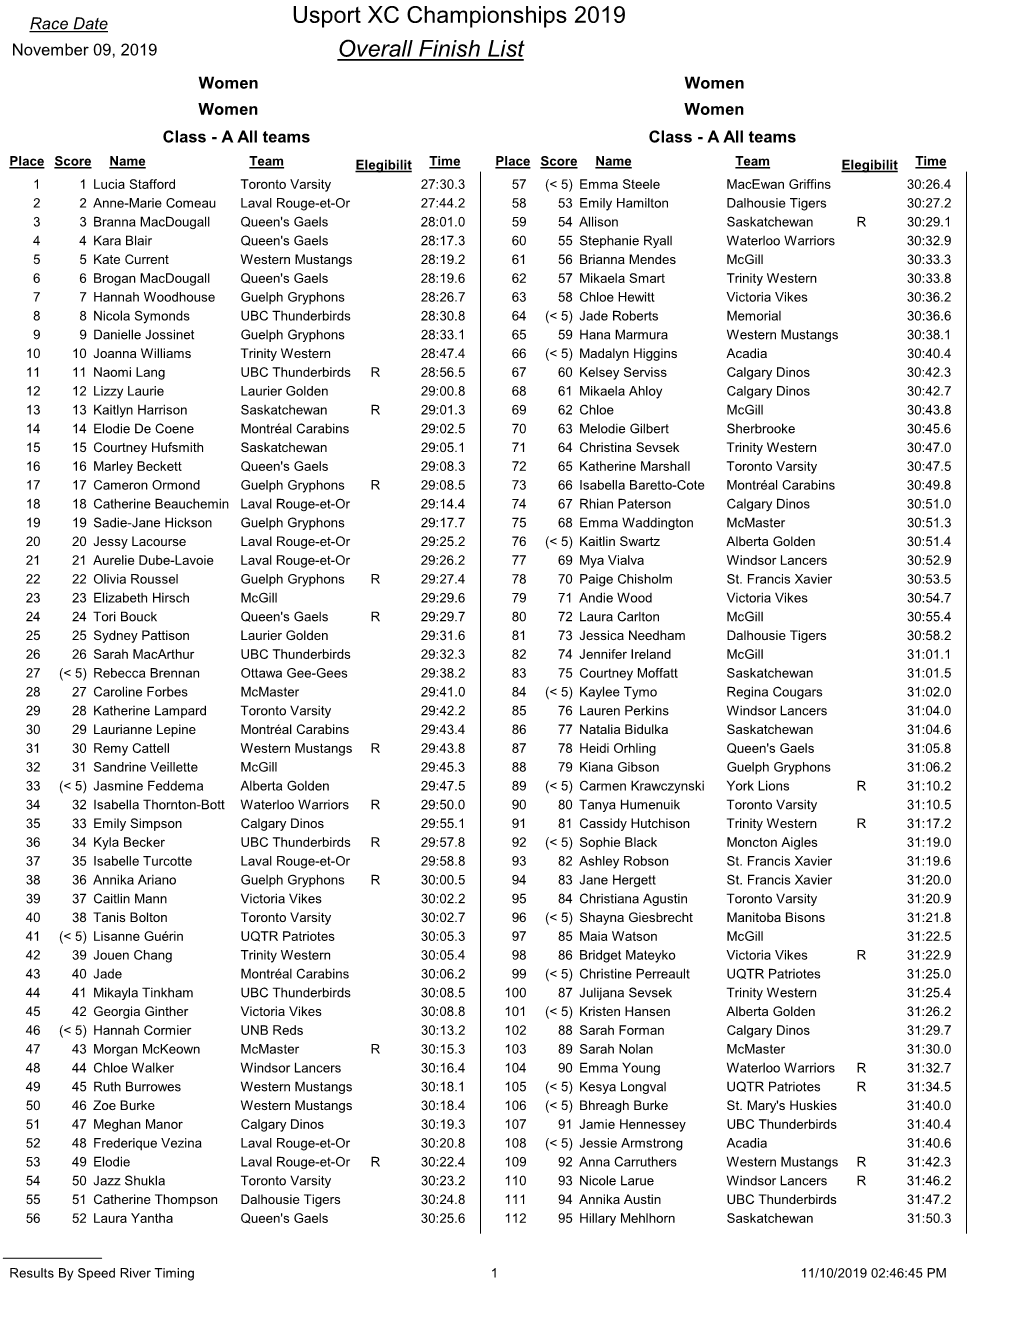 Usport XC Championships 2019 Overall Finish List